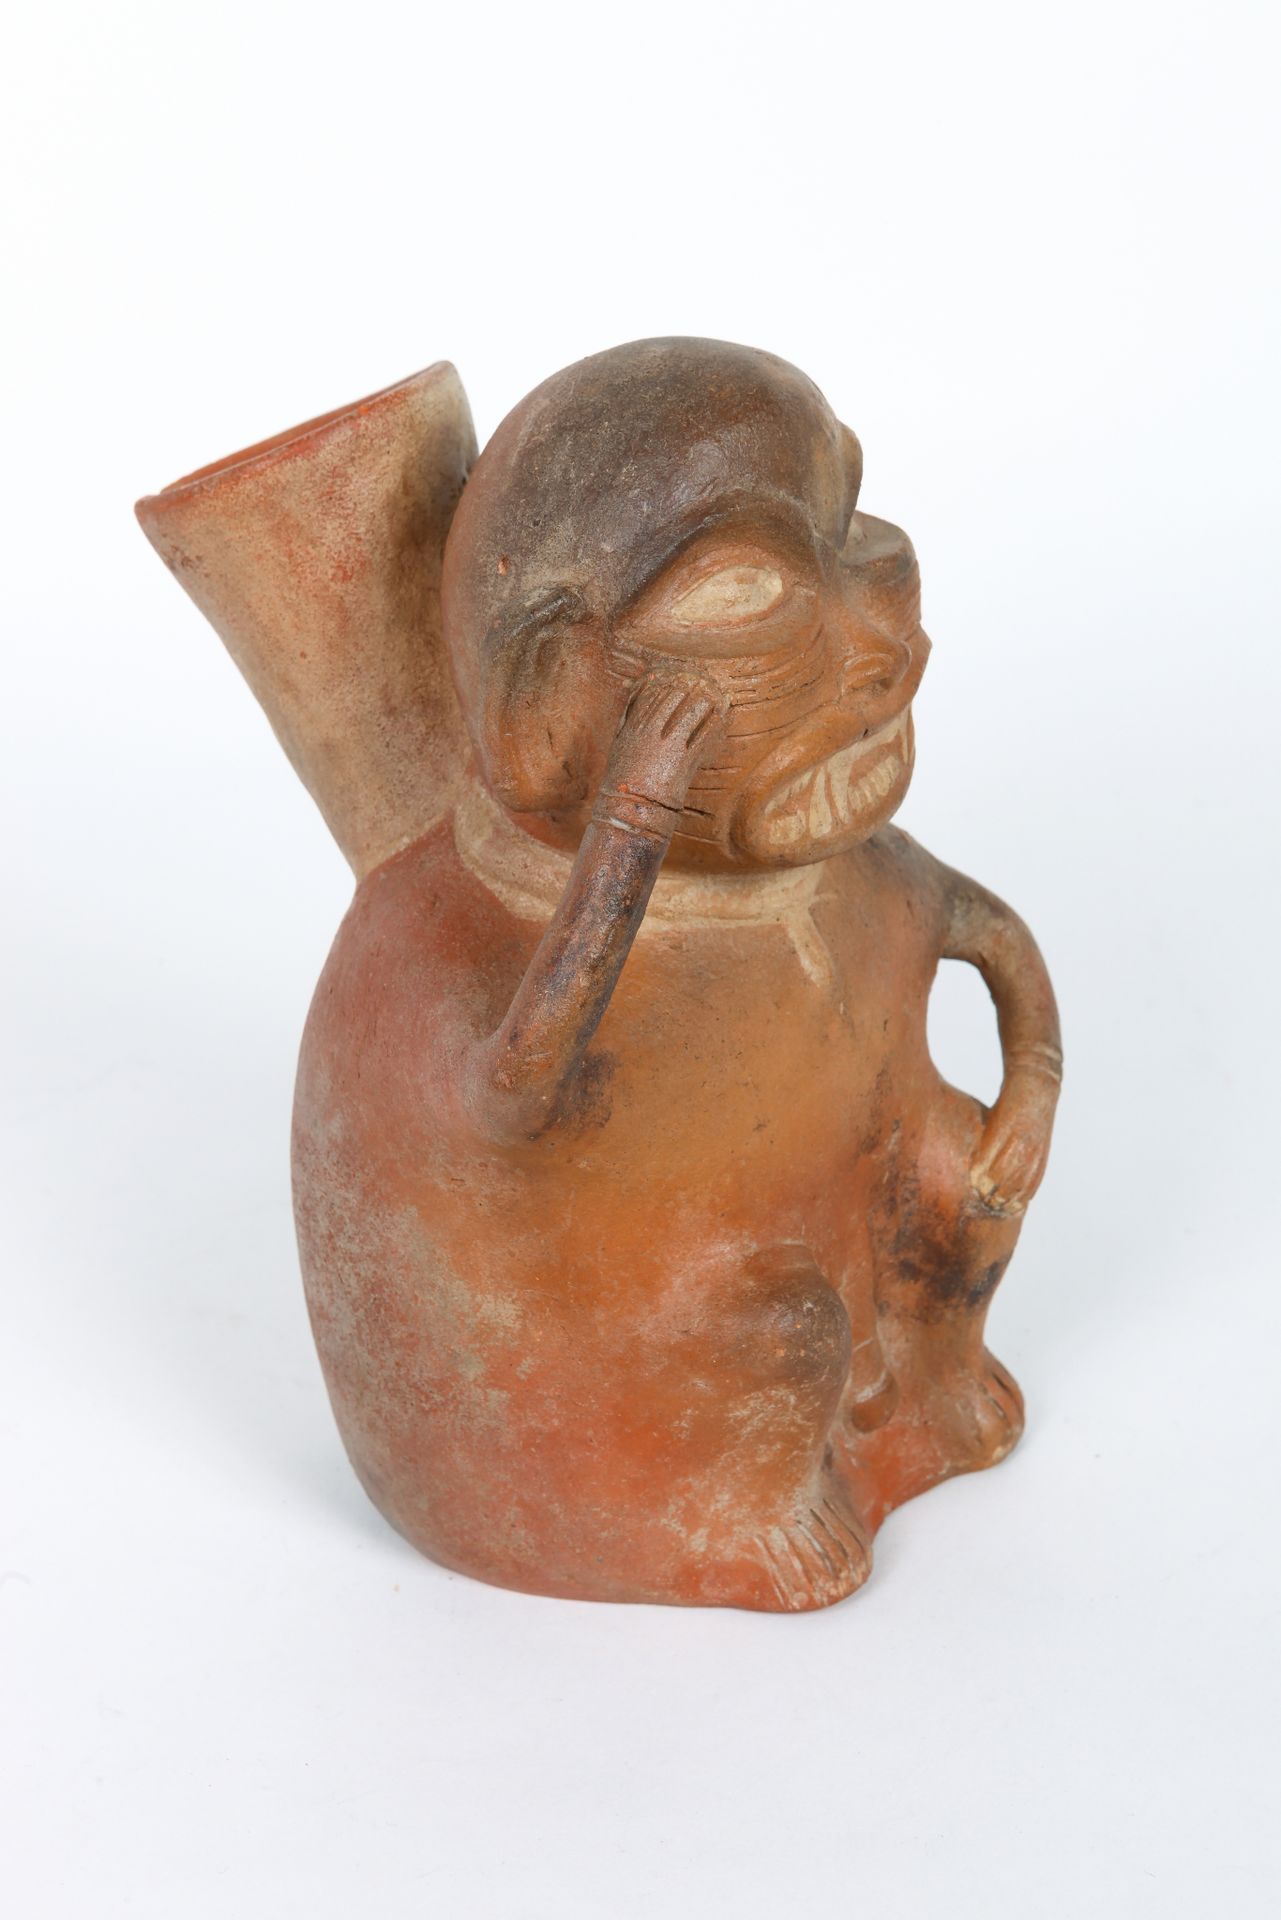 Vase 猴神模型，坐着，面容人性化，表情忿怒。 

米色-橙色的陶土。 

莫奇卡，公元200-600年

22 x 15.5 cm